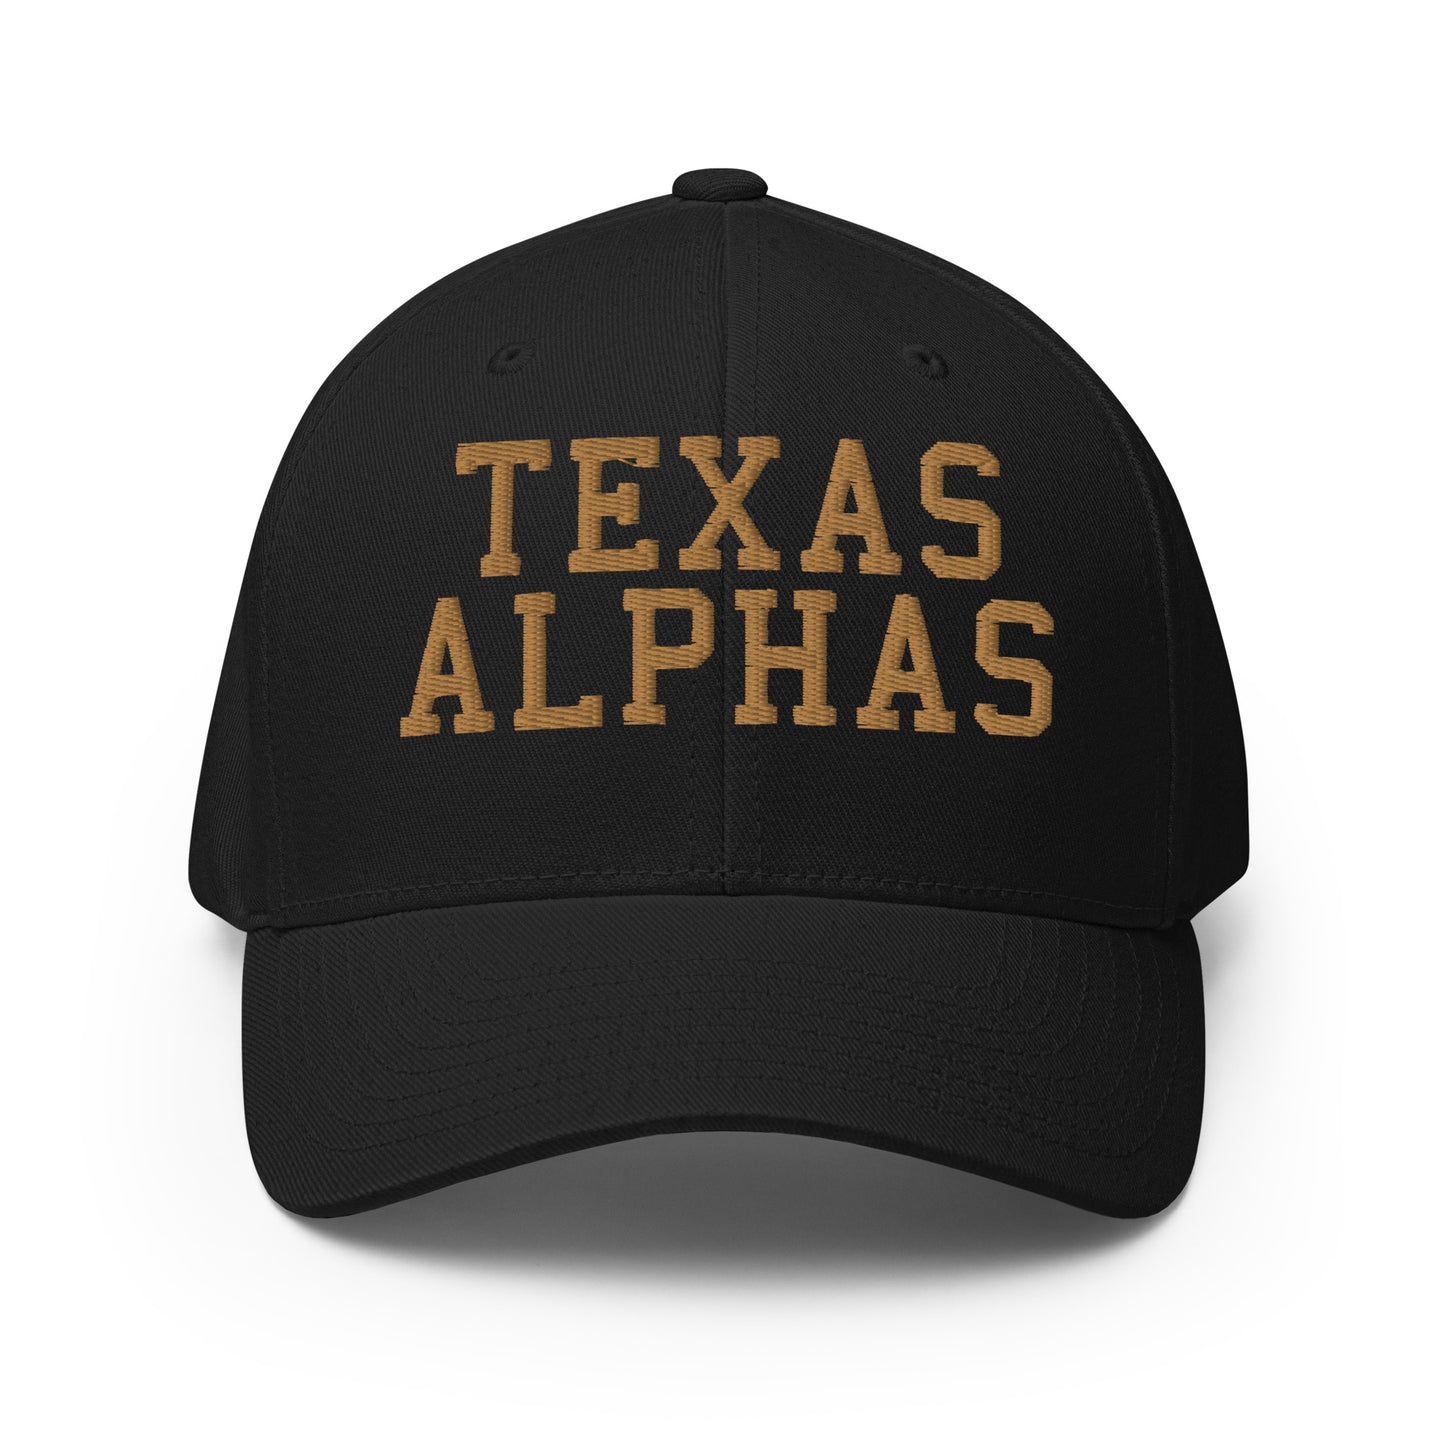 Texas Alphas no back